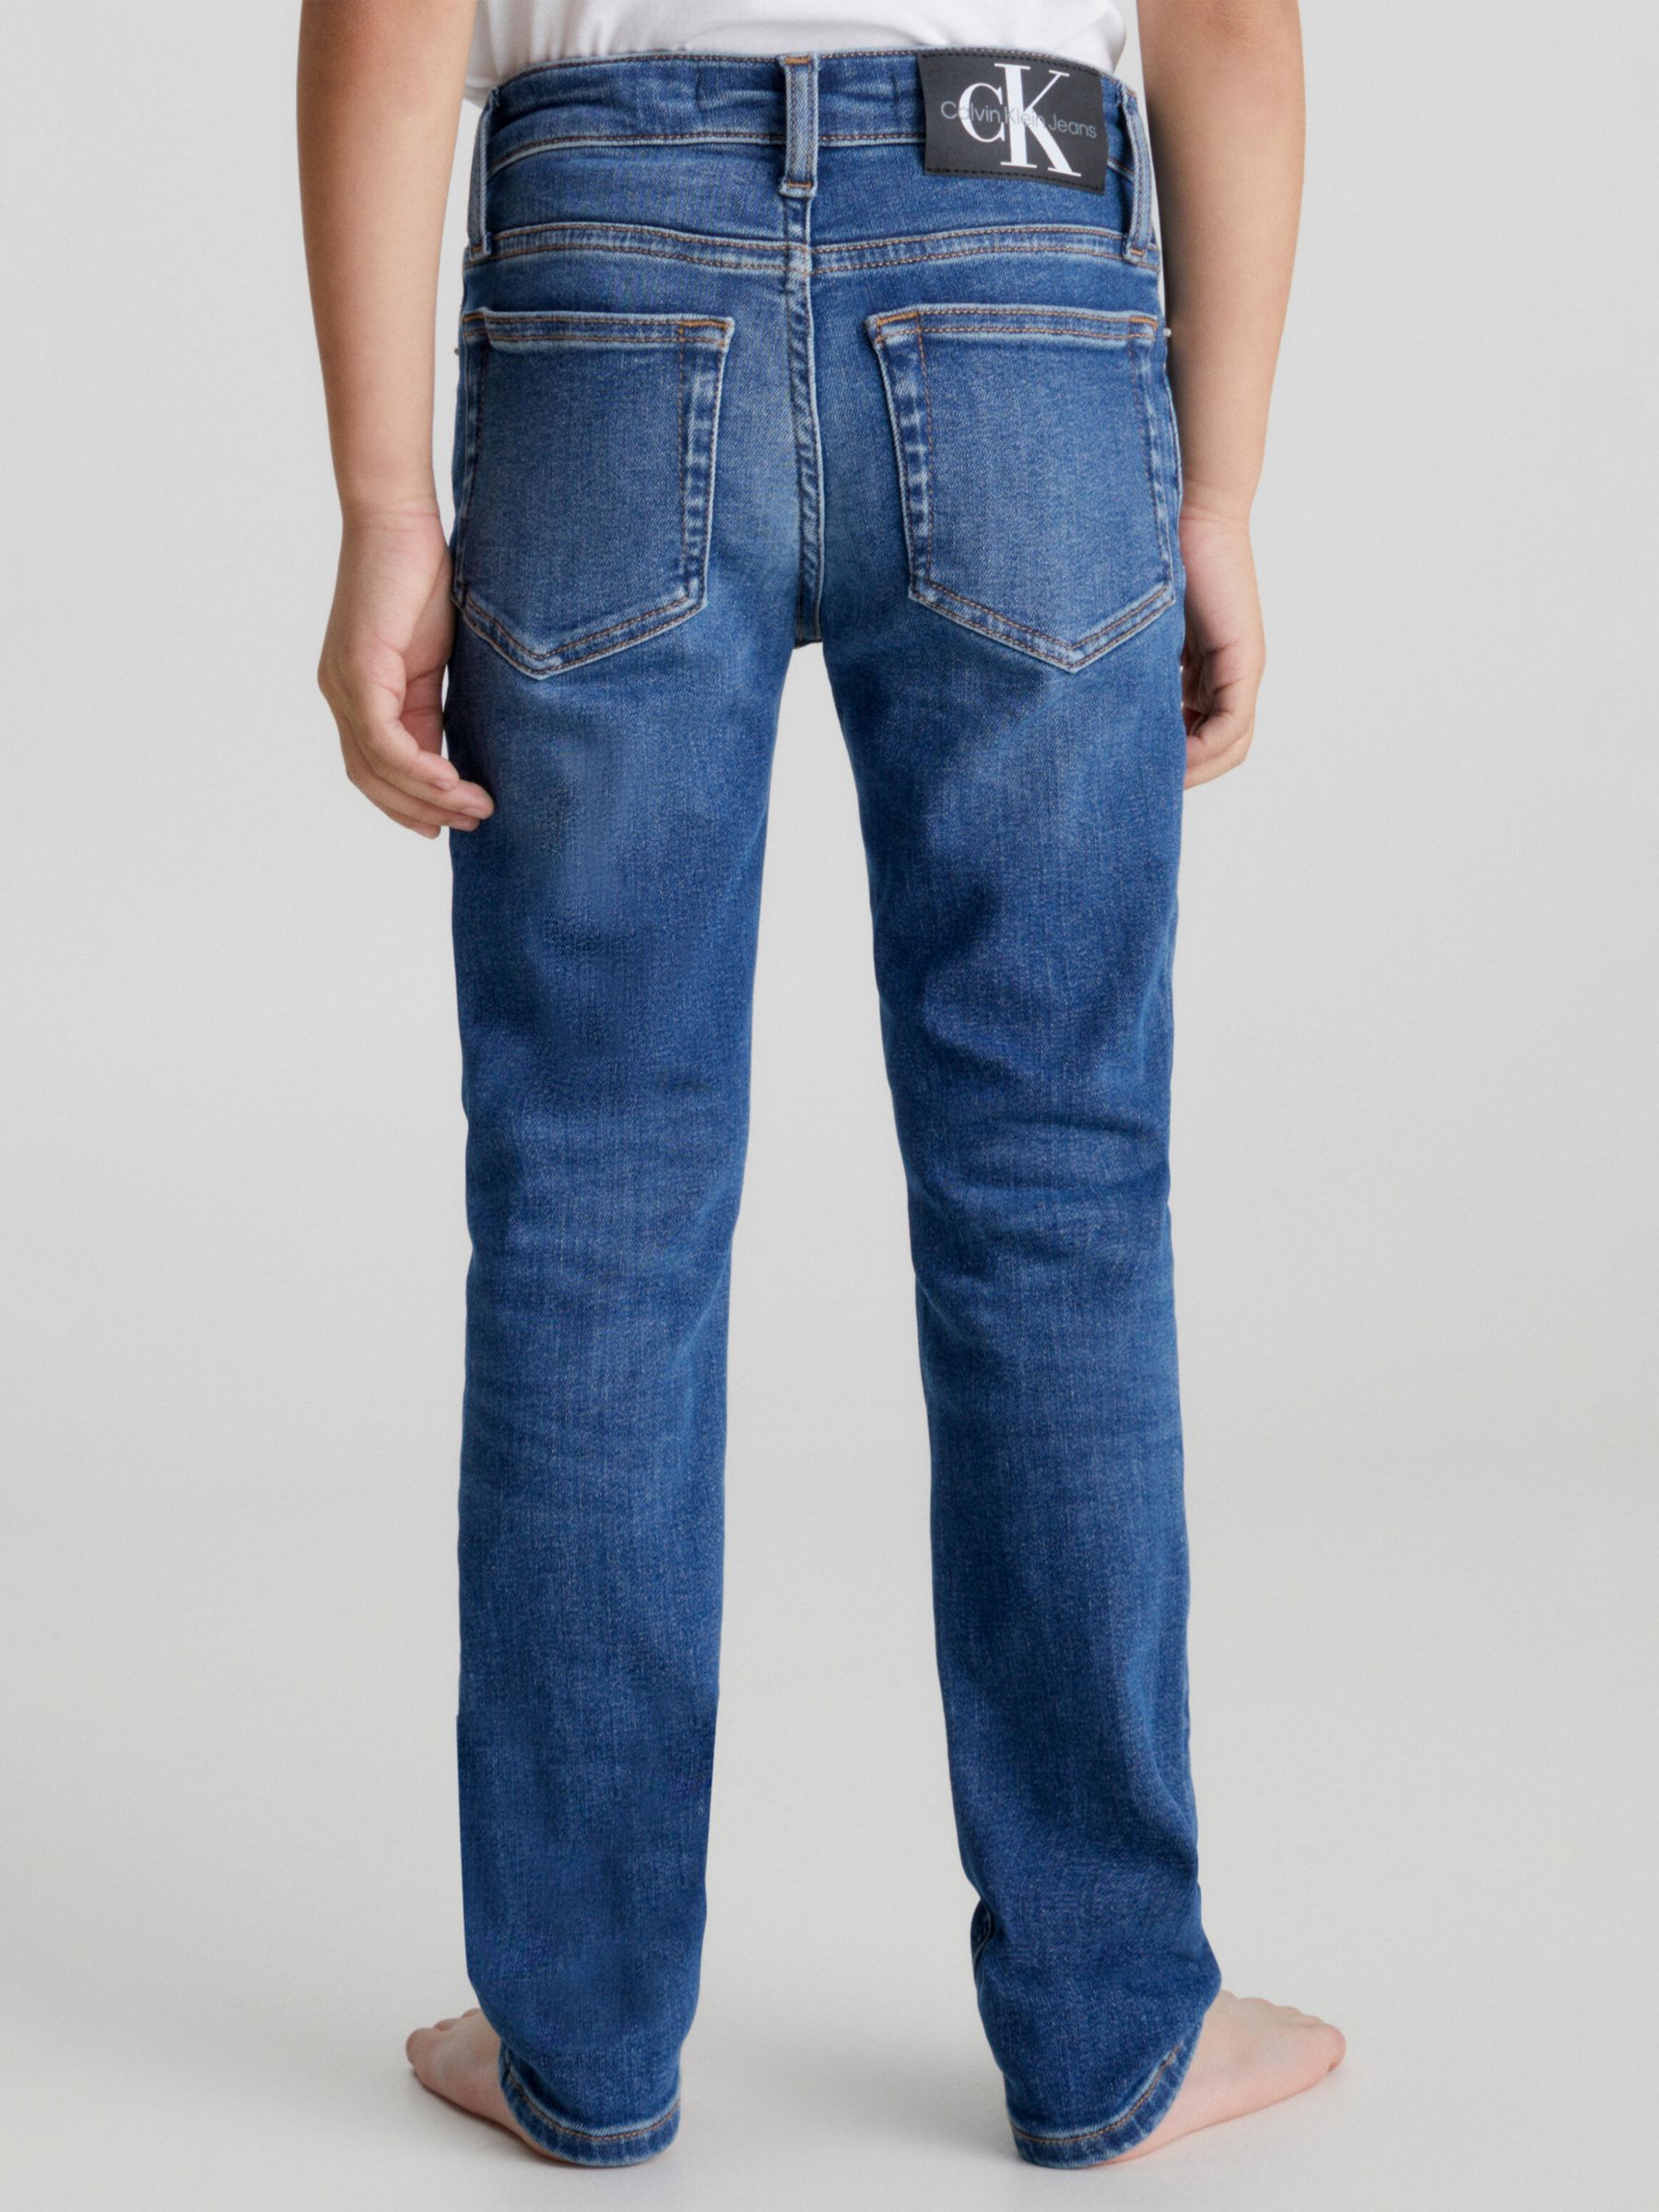 Calvin Klein Kids' Slim Essential Jeans, Mid Blue at John Lewis & Partners